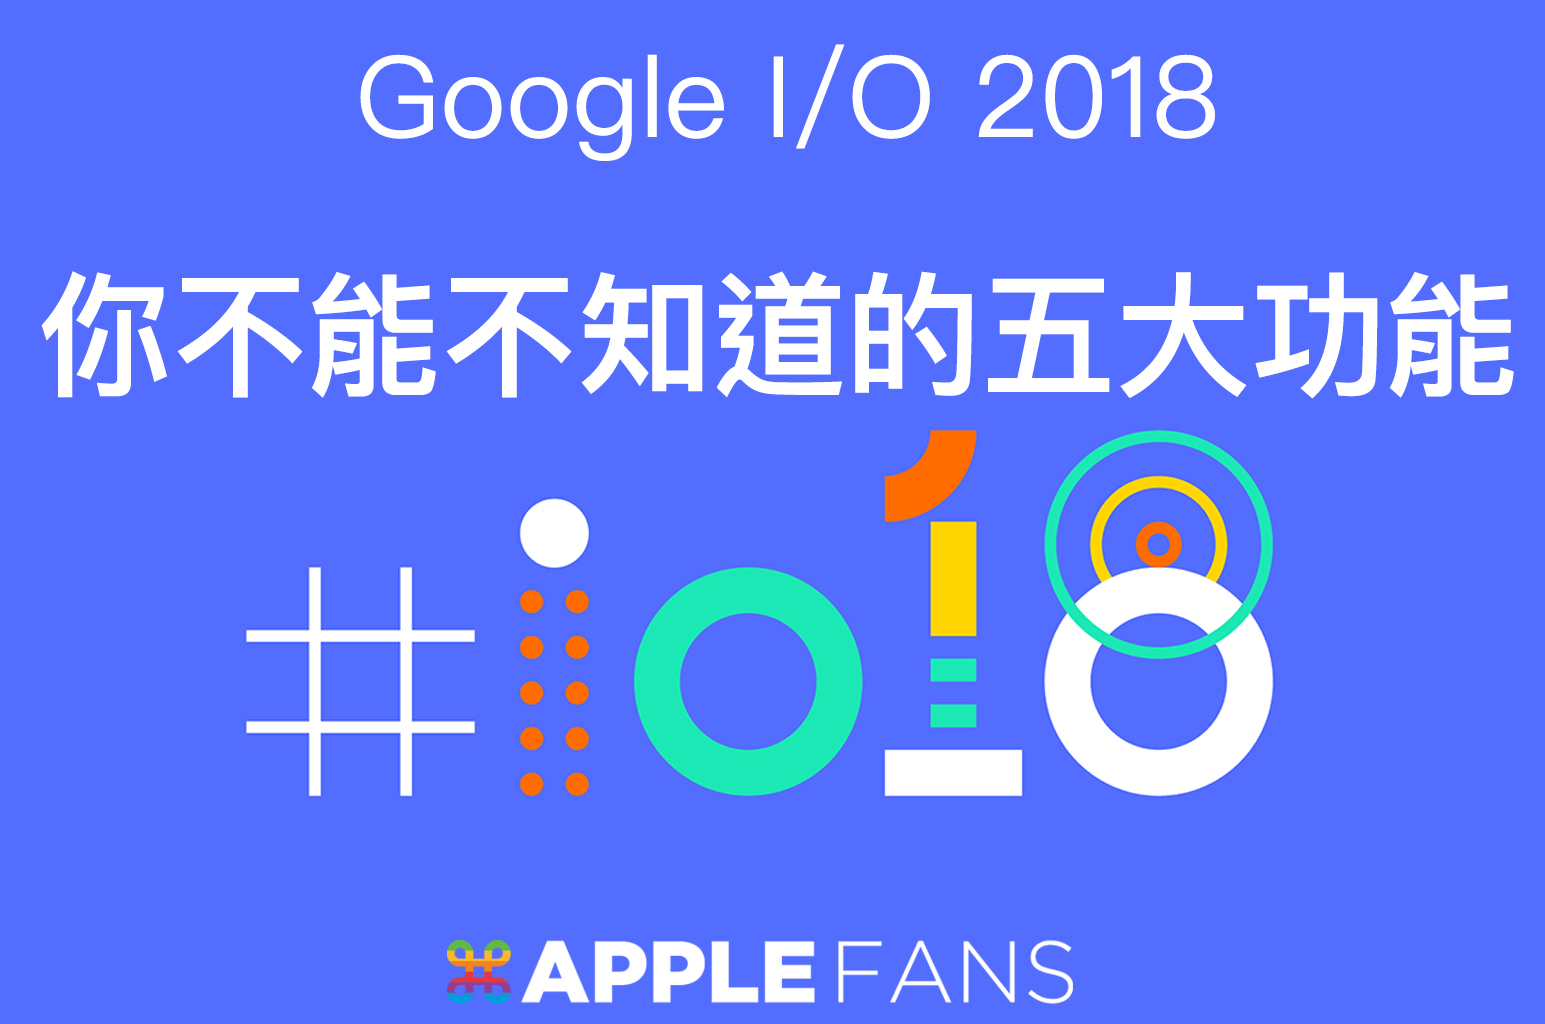 Google IO 發表會